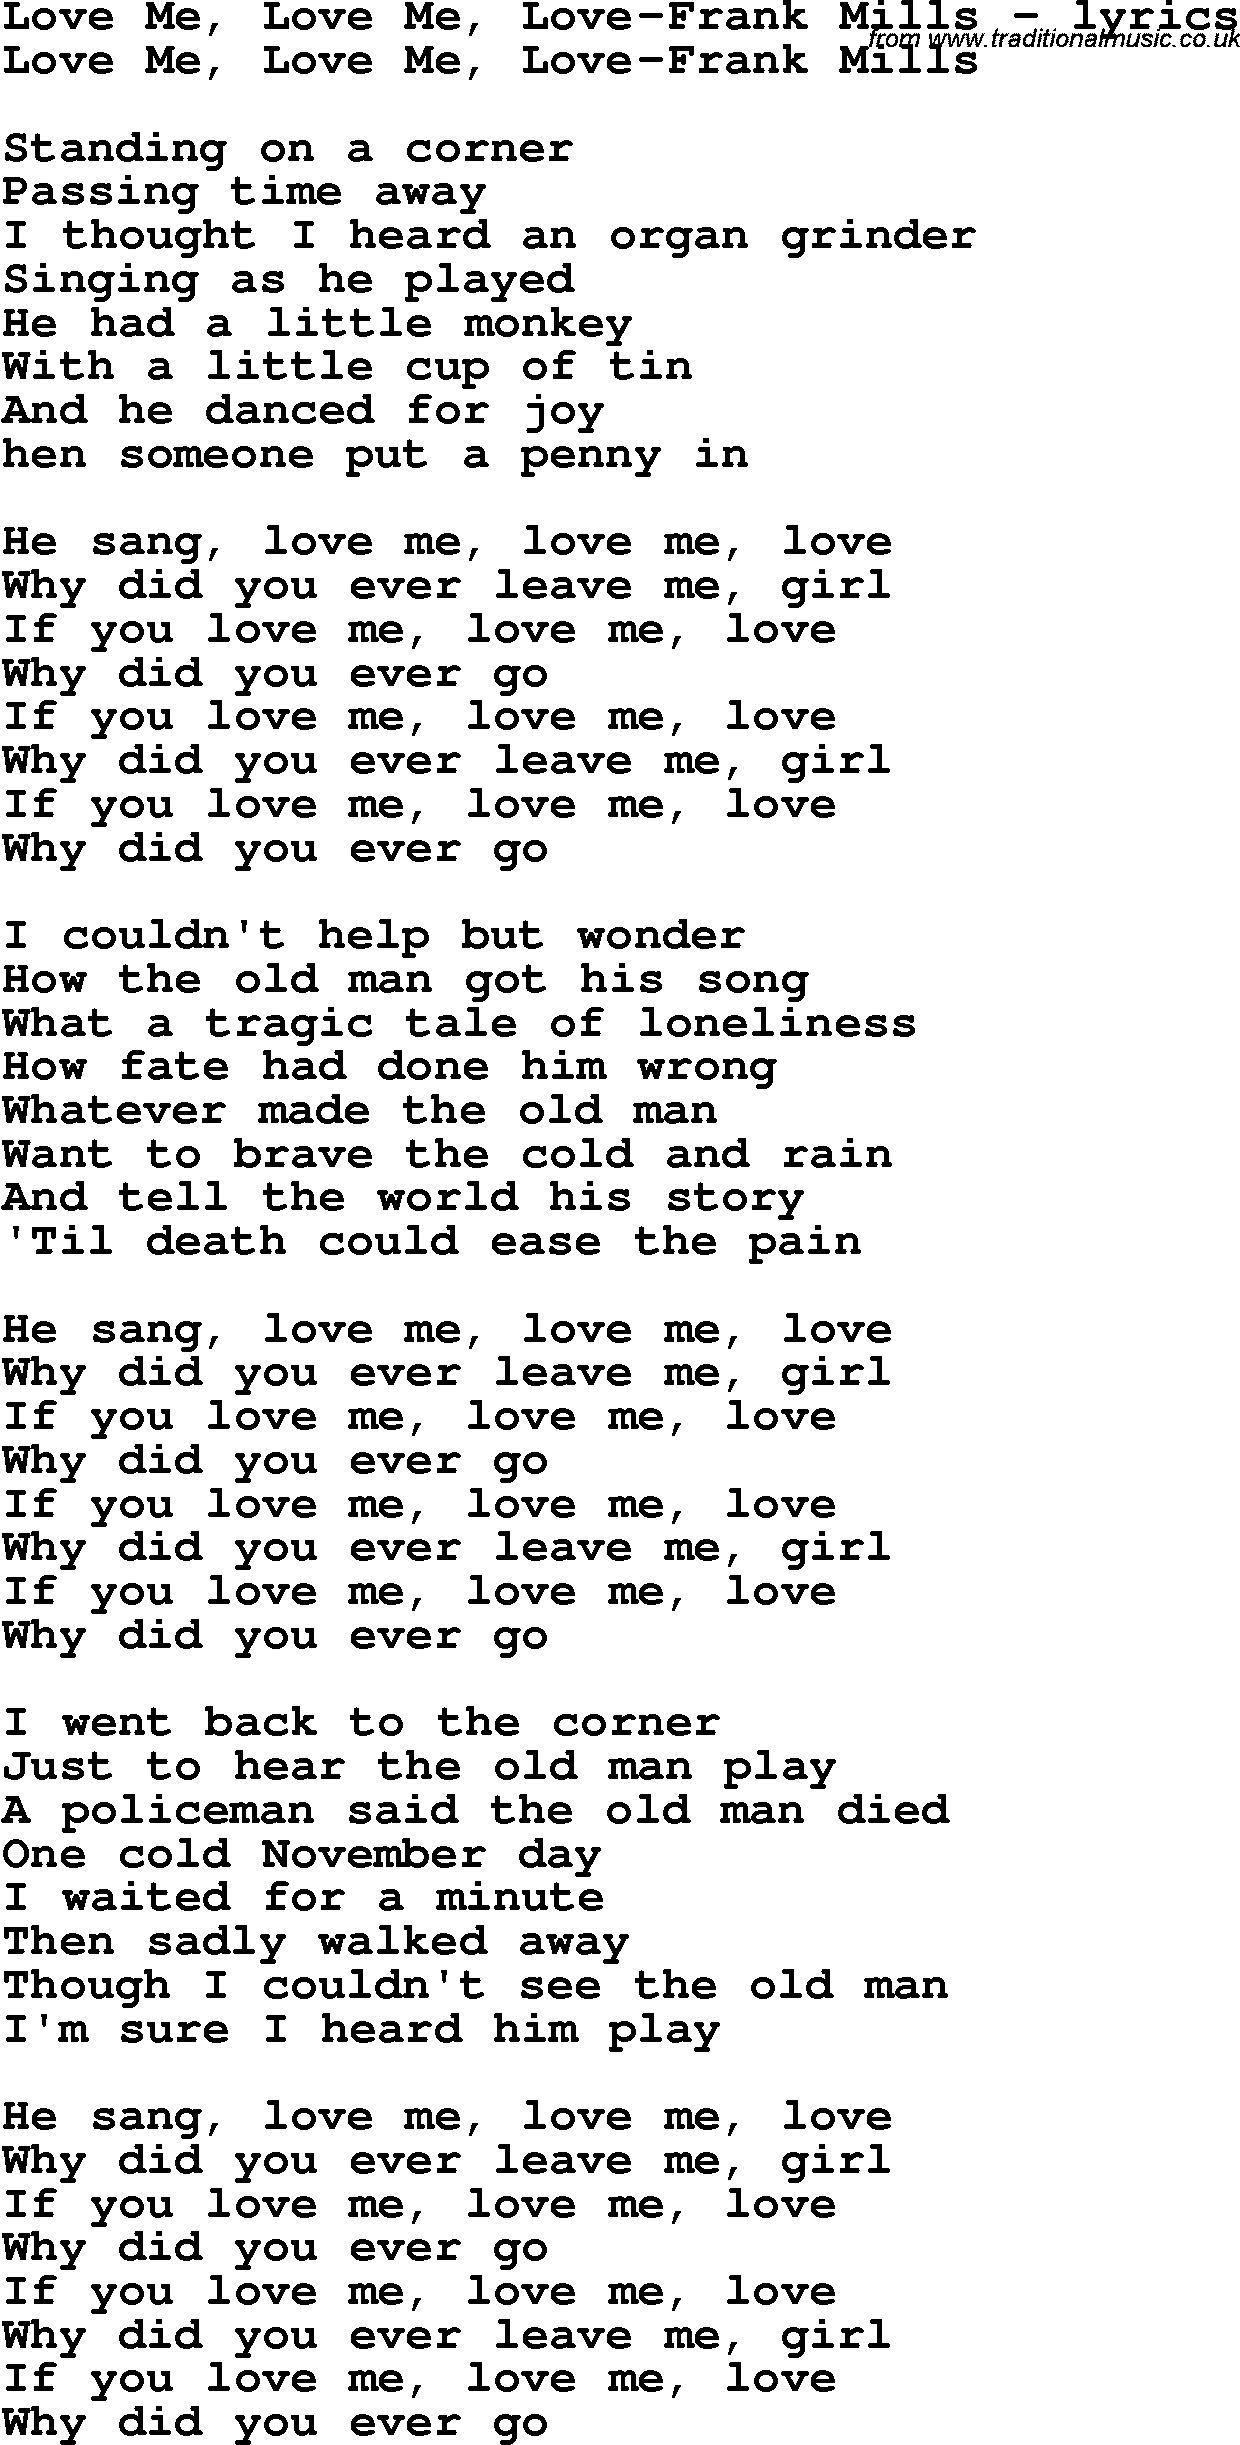 Love Song Lyrics for: Love Me, Love Me, Love-Frank Mills